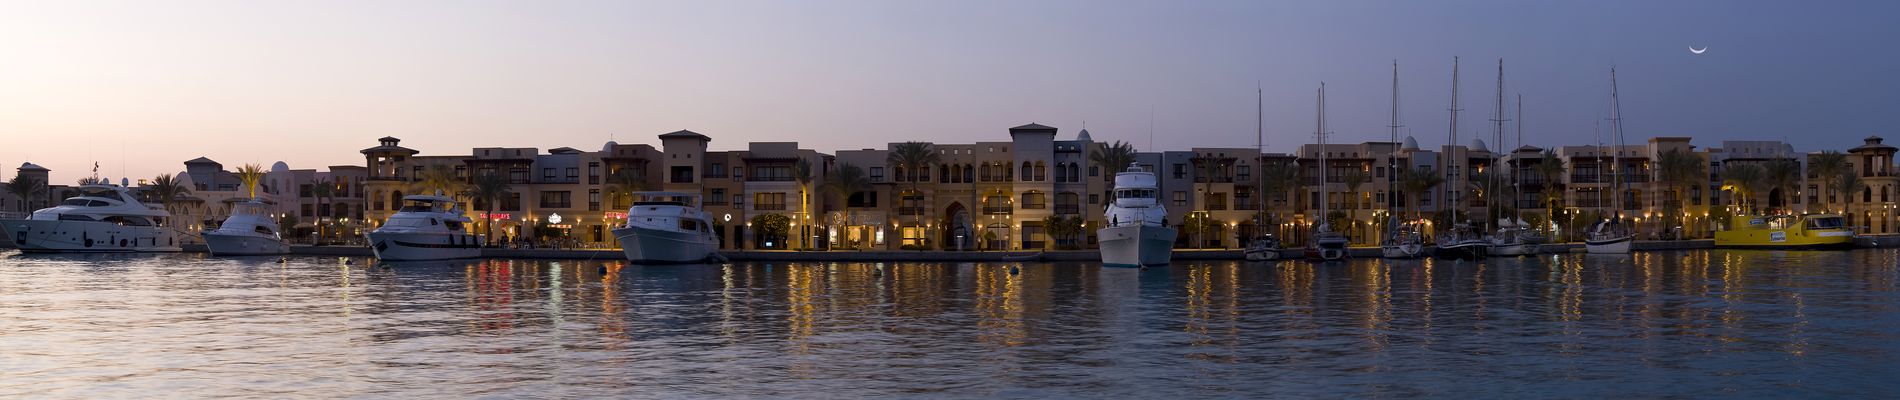 Port Ghalib Hotels banner